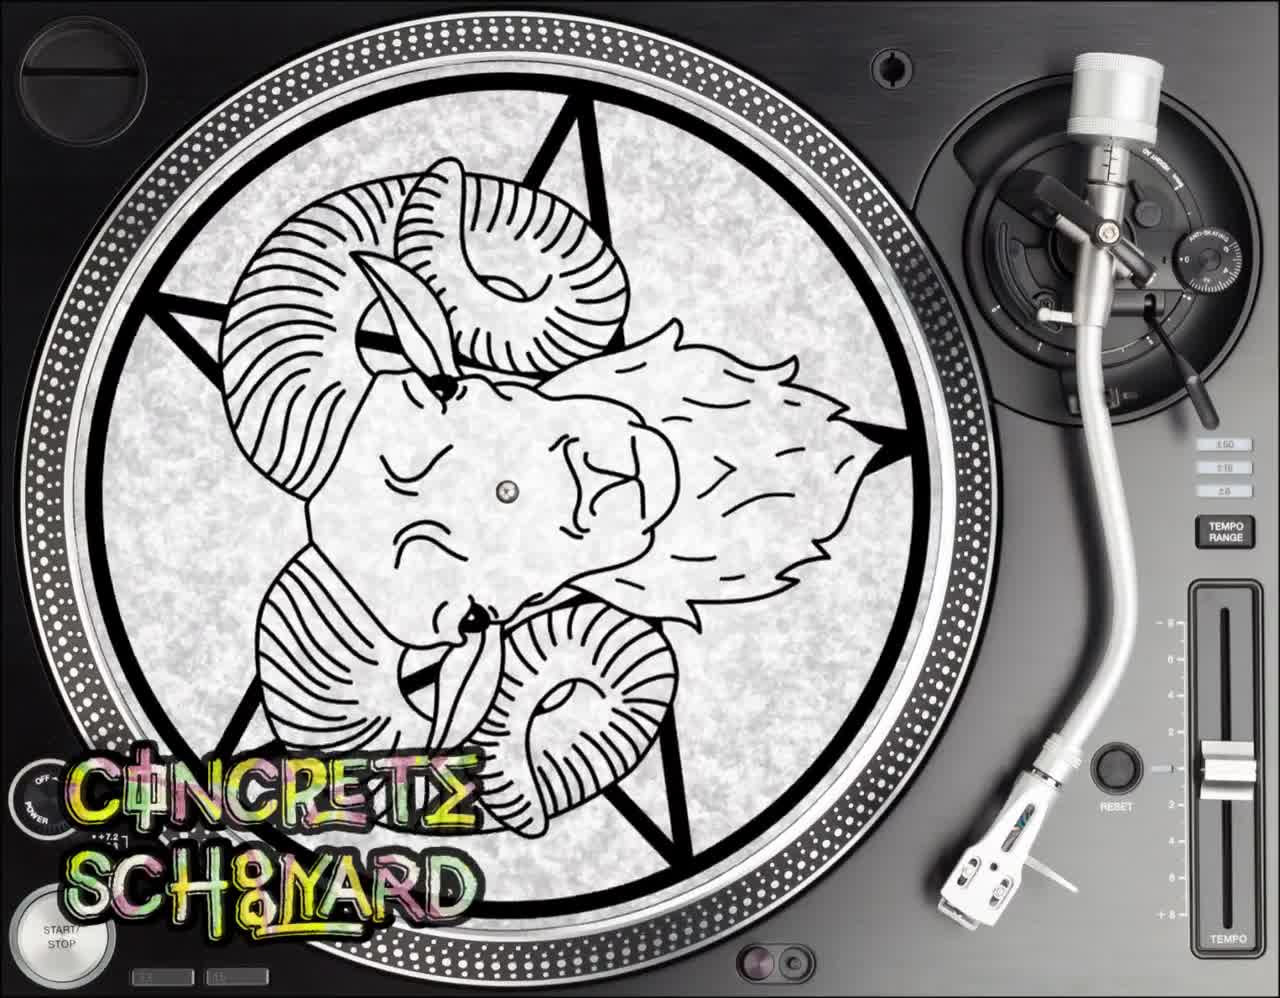 Gothic, Satanic & Demonic Themed Record Player Slipmat, High